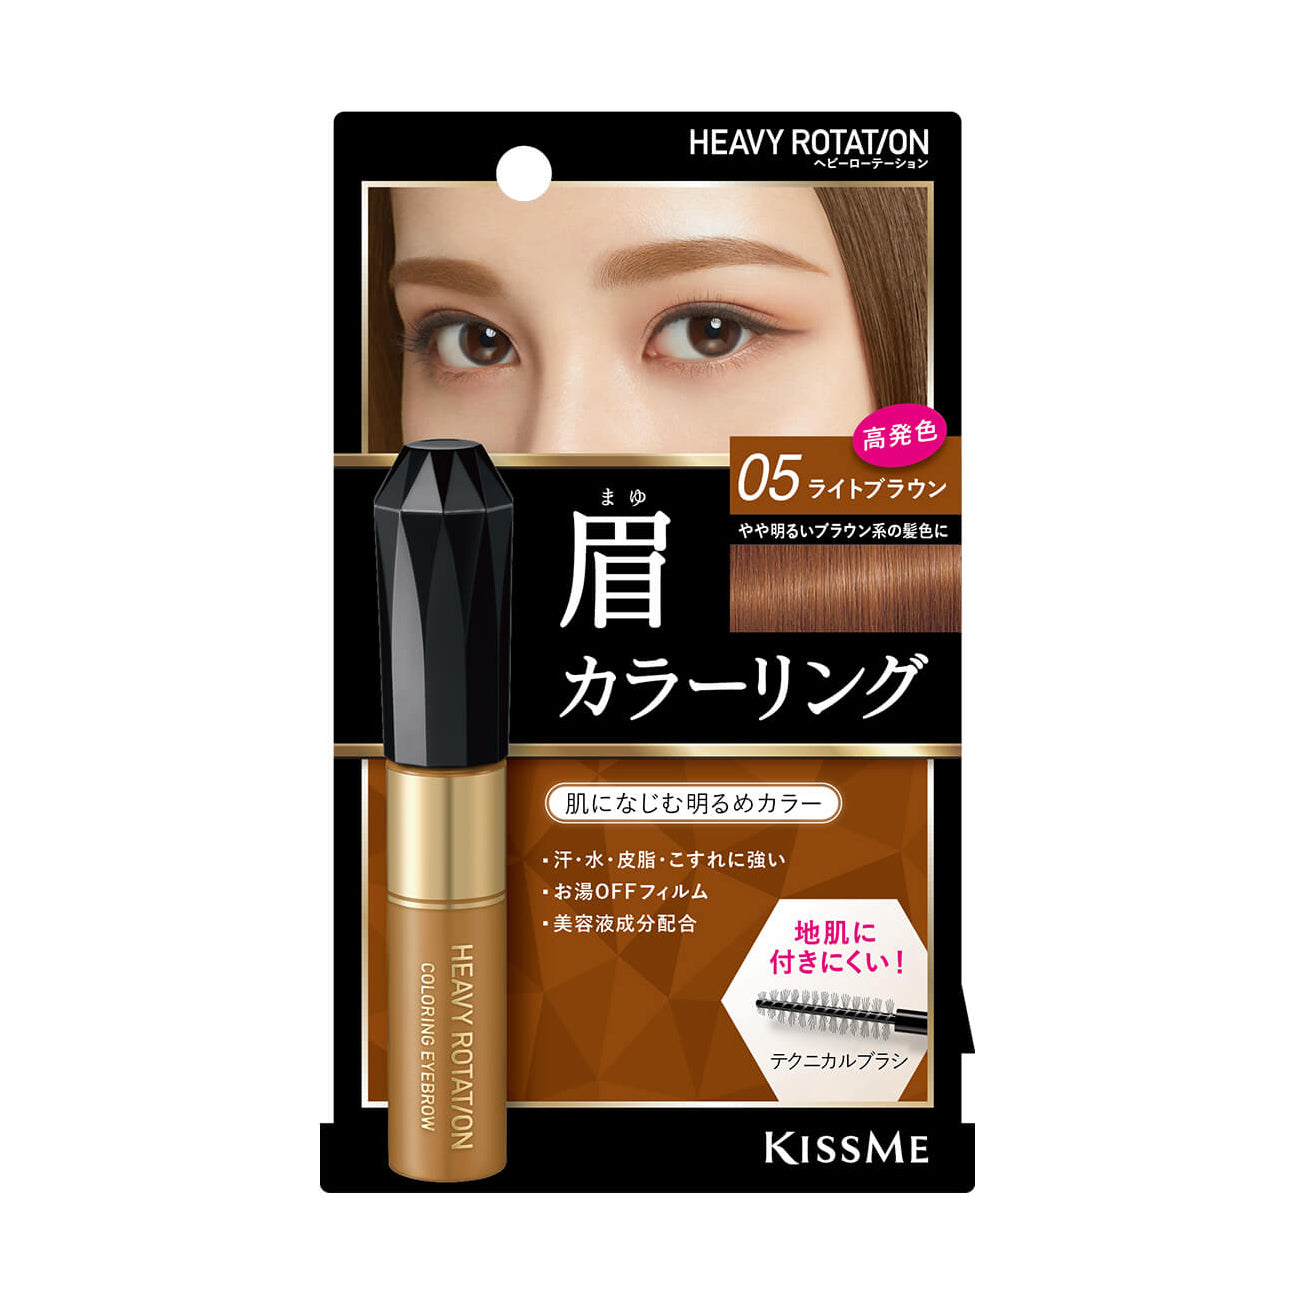 Kiss Me Heavy Rotation Coloring Eyebrow Mascara 05 Light Brown Beauty Isehan   